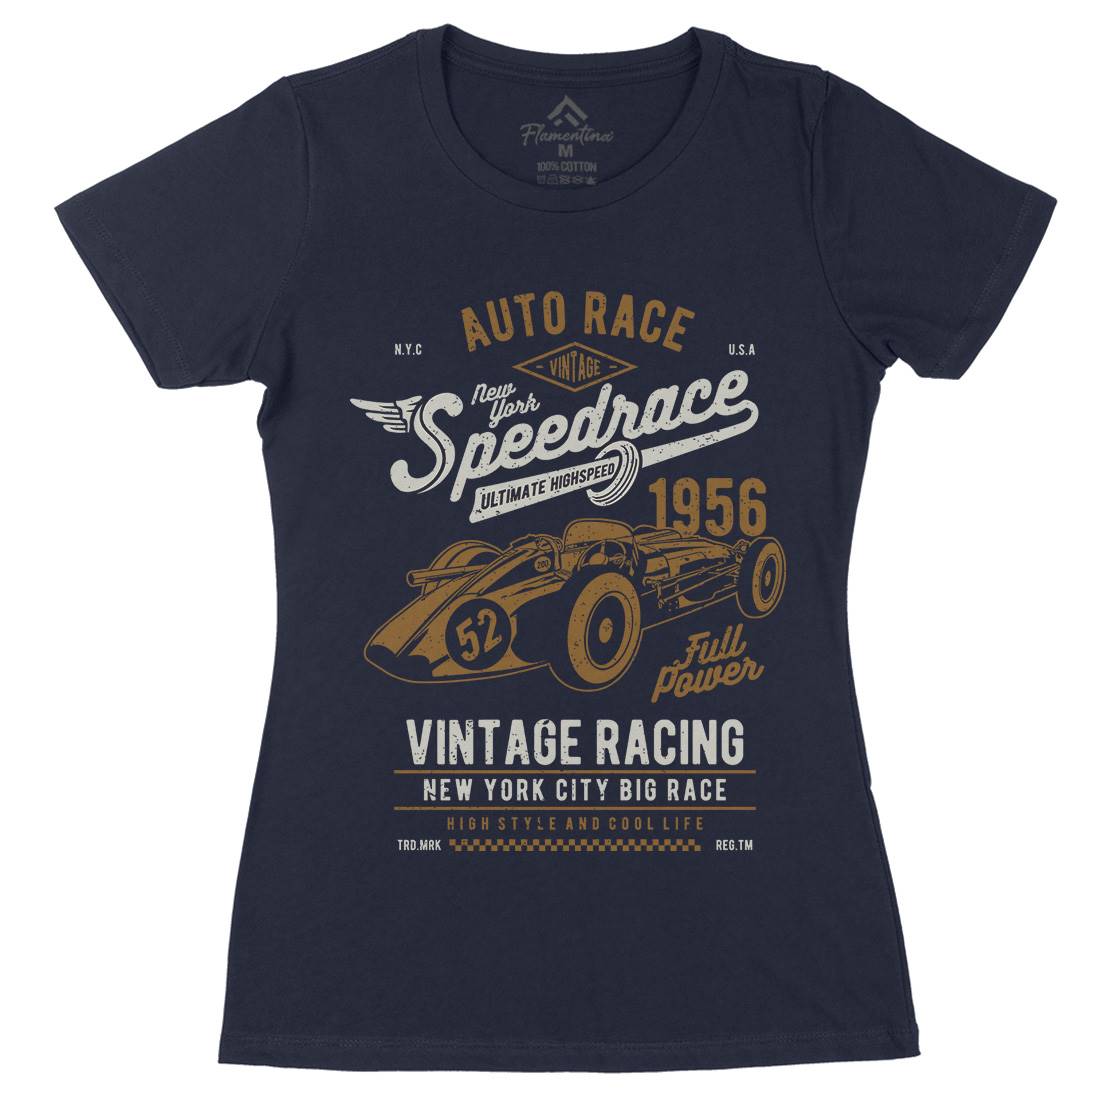 Vintage Speedrace Womens Organic Crew Neck T-Shirt Cars A788